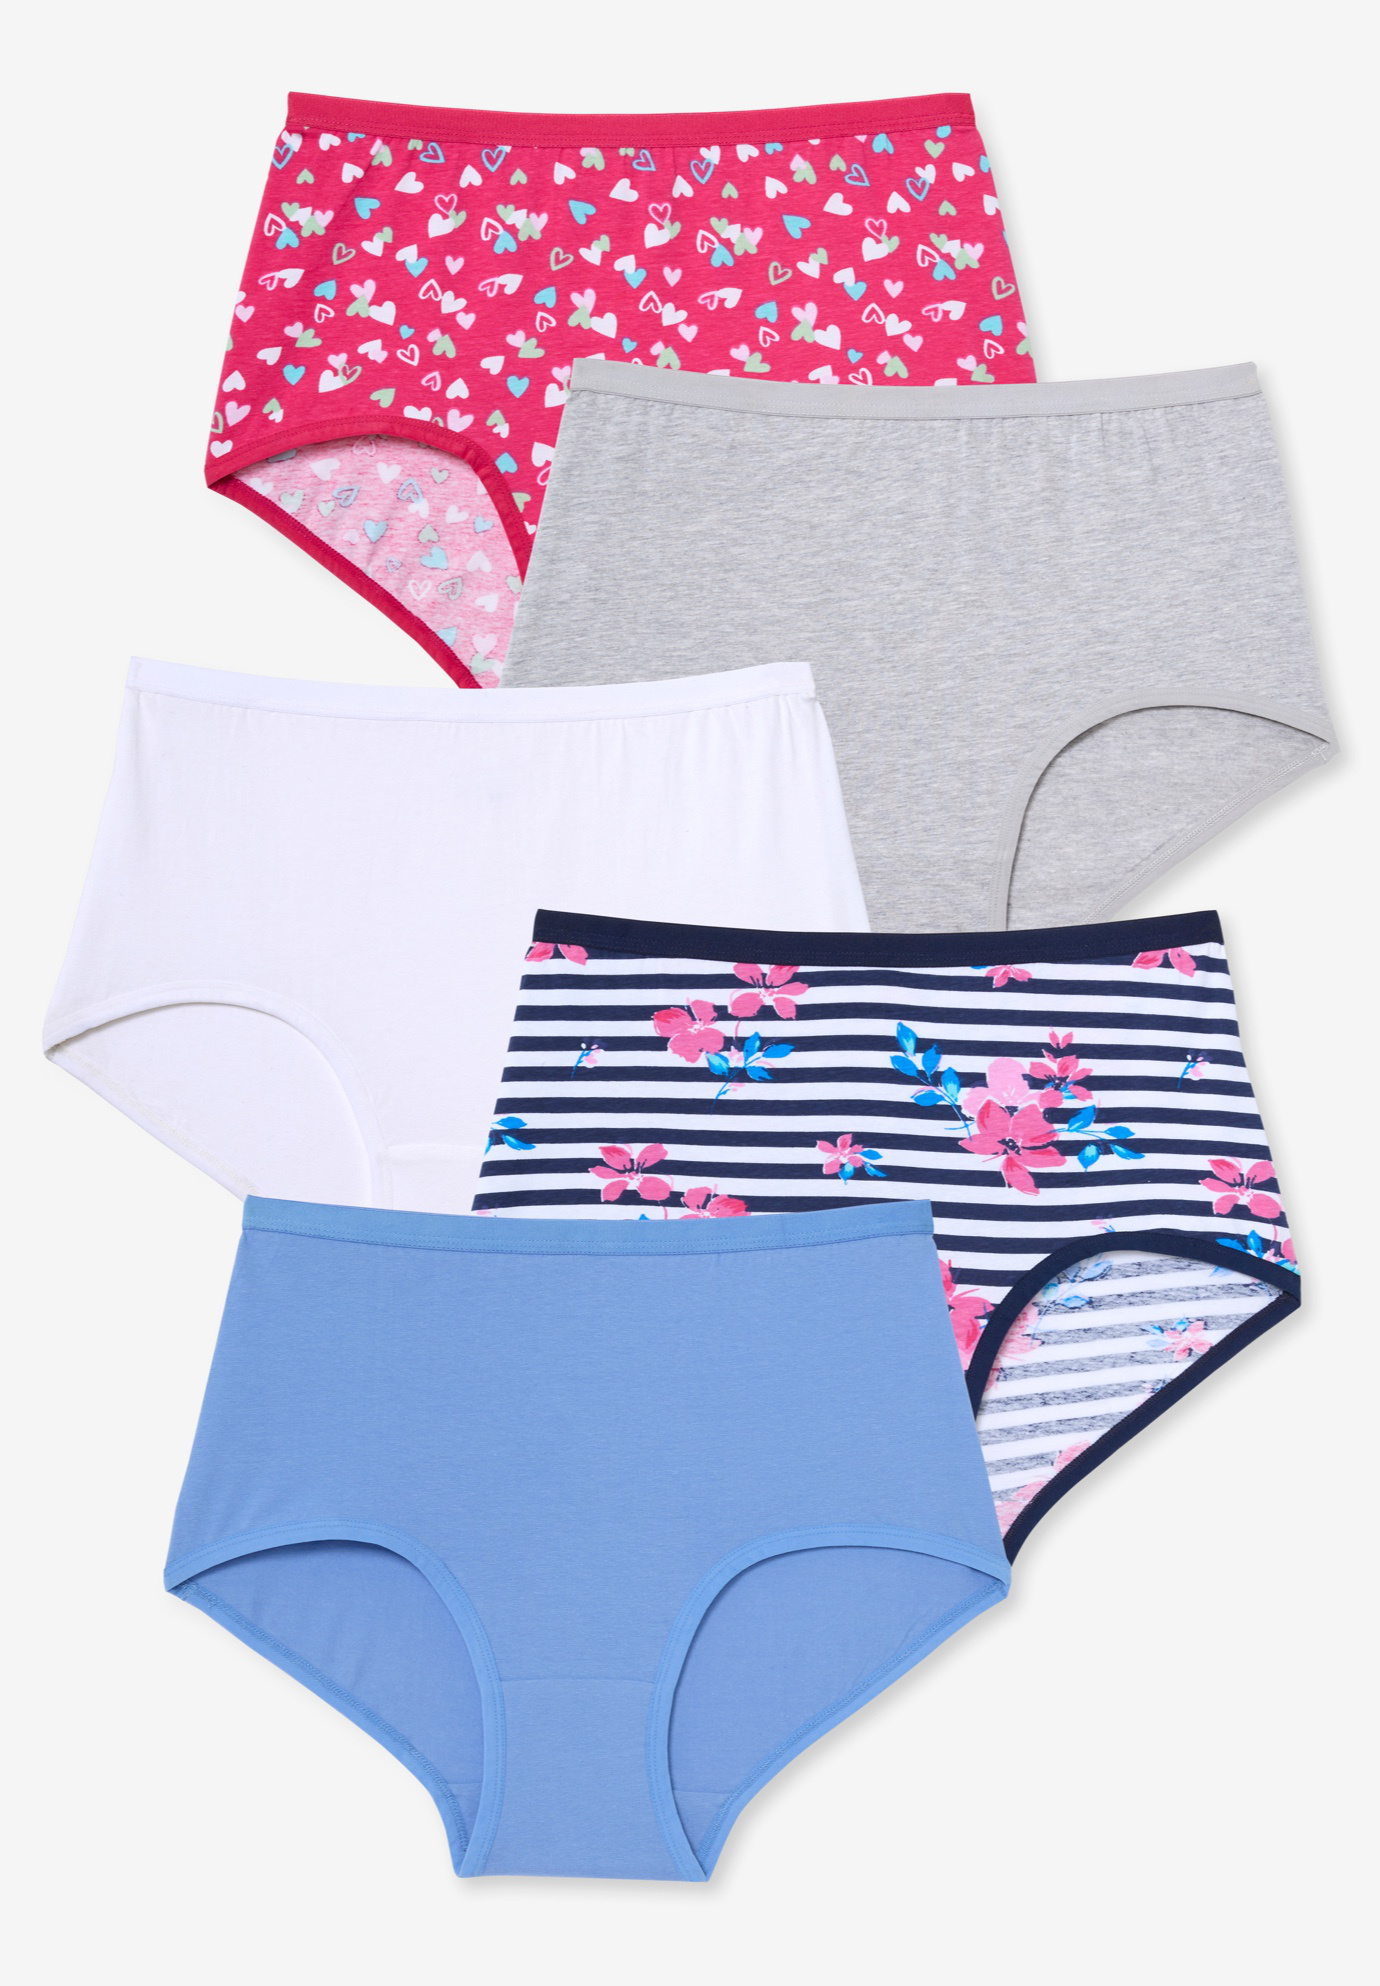 Buy Comfort Choice Women's Plus Size 3-Pack Boyshort Underwear